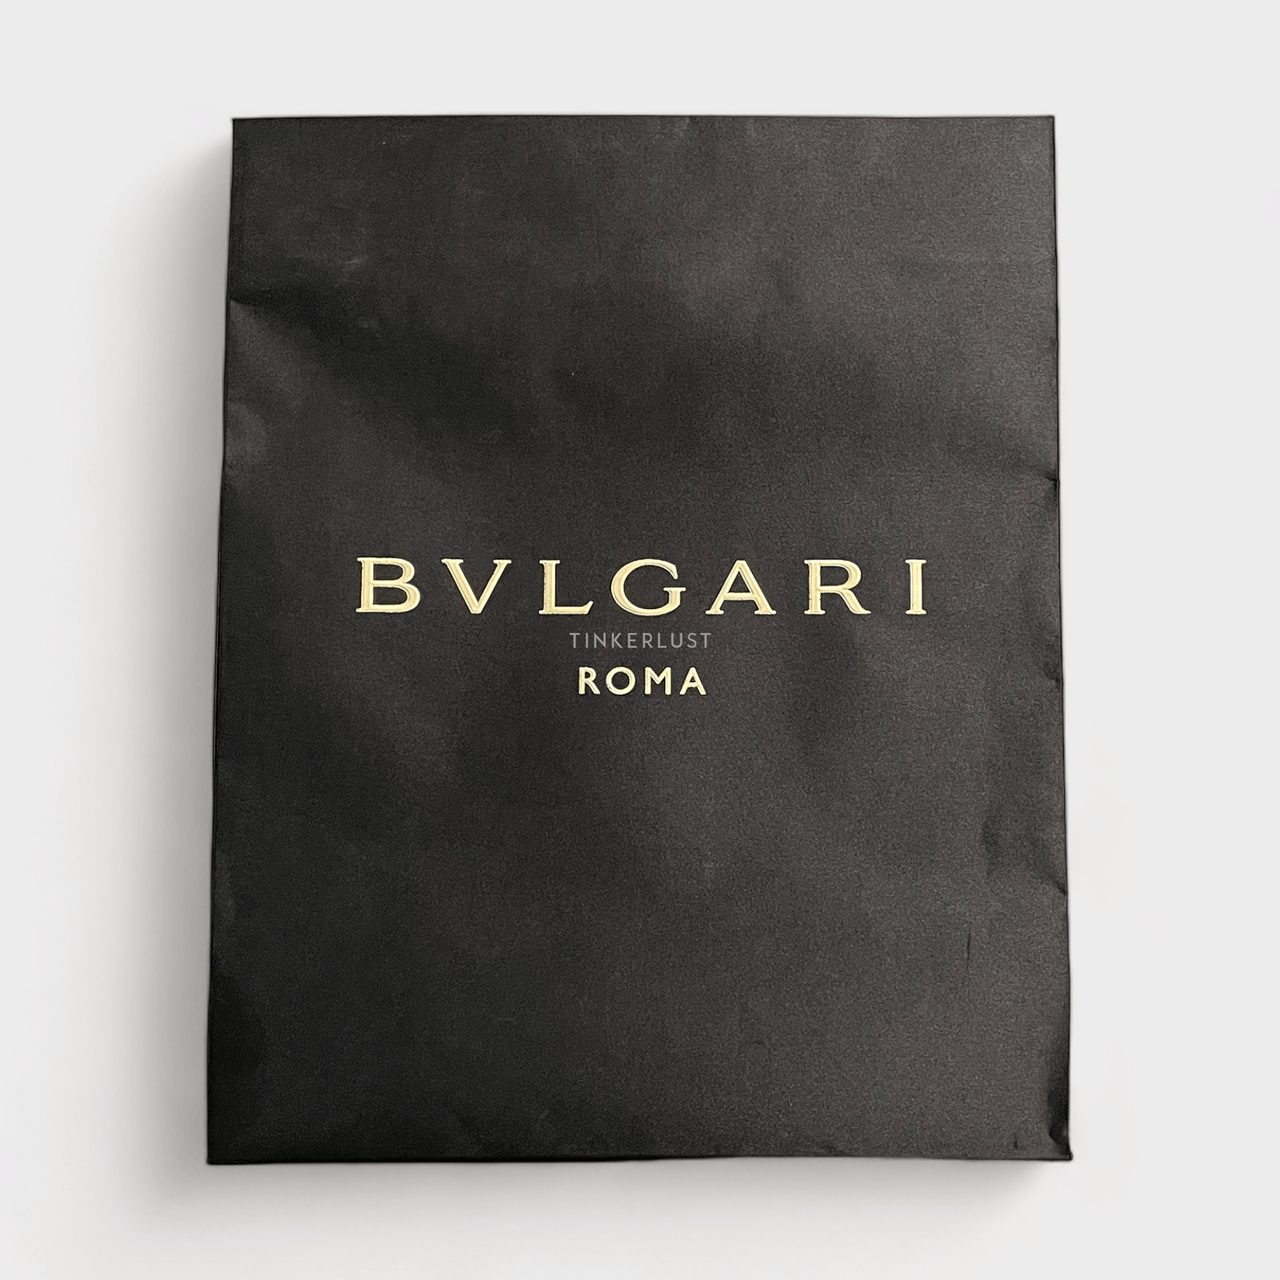 Bvlgari Black Leather Leopard Print Calfhair Serpenti Scaglie Satchel Bag 